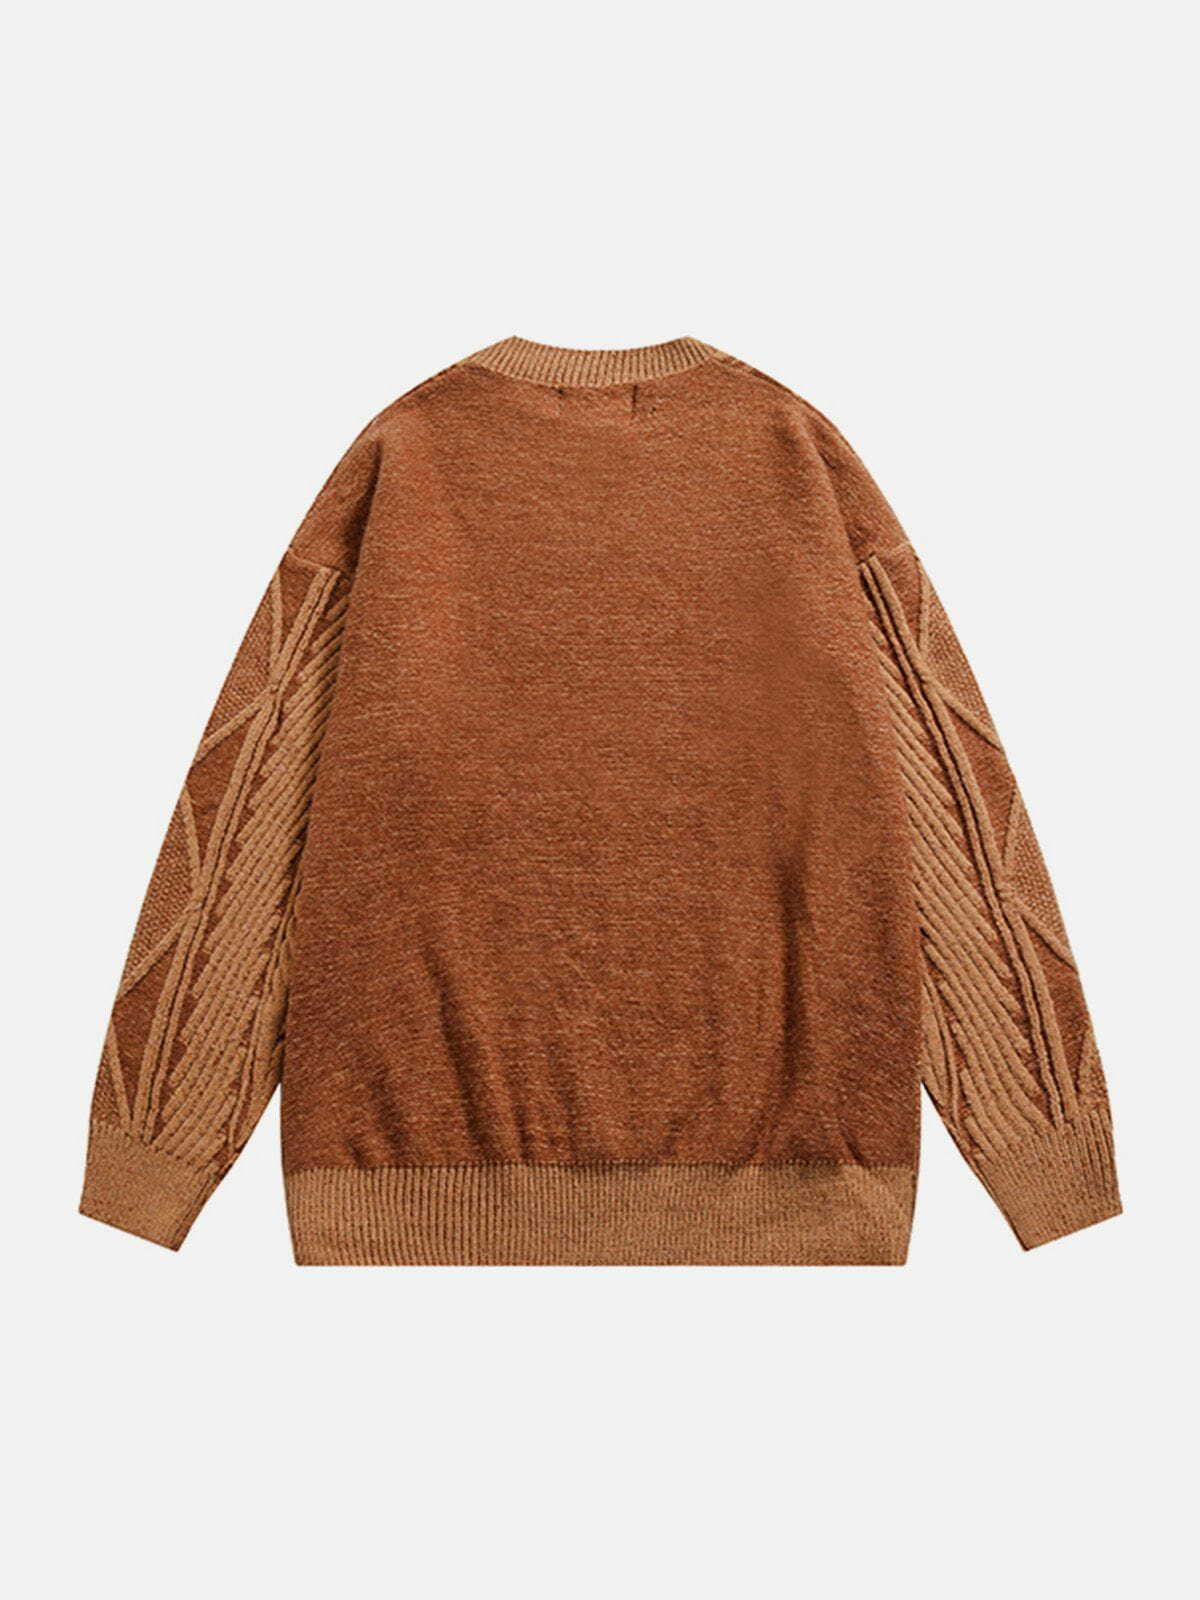 knit rhombus sweater retro & edgy urban fashion 3462